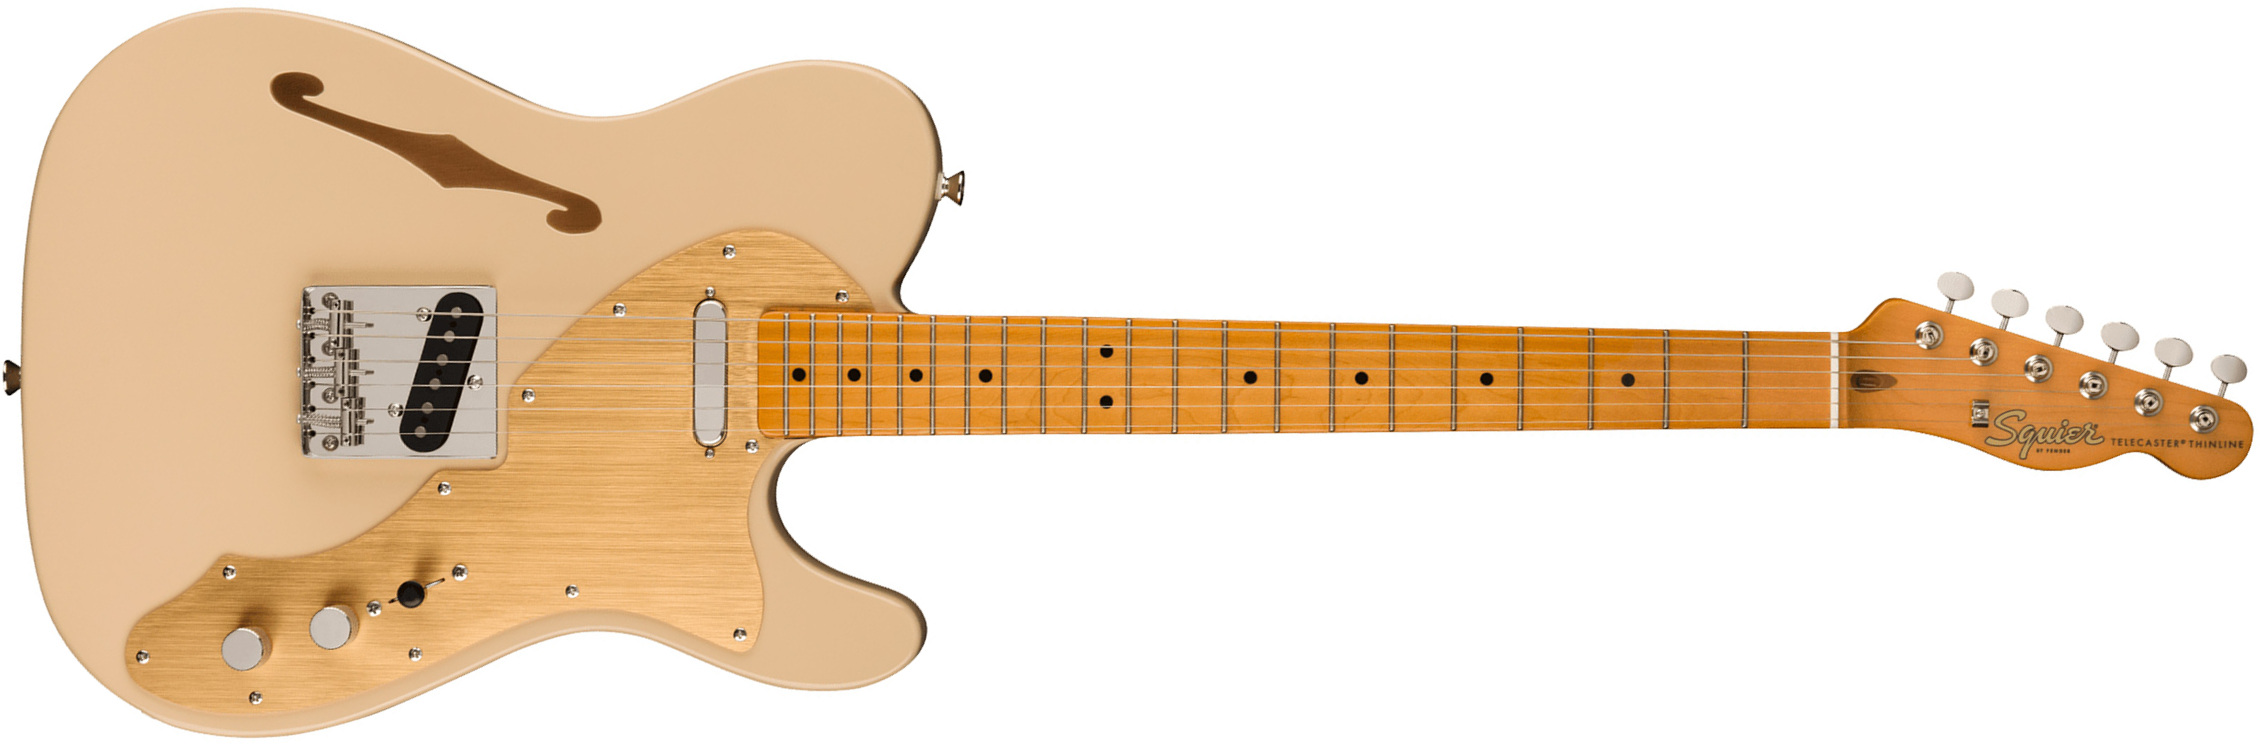 Squier Tele '60s Thinline Gold Anodized Pickguard Classic Vibe Fsr 2s Ht Mn - Desert Sand - Televorm elektrische gitaar - Main picture